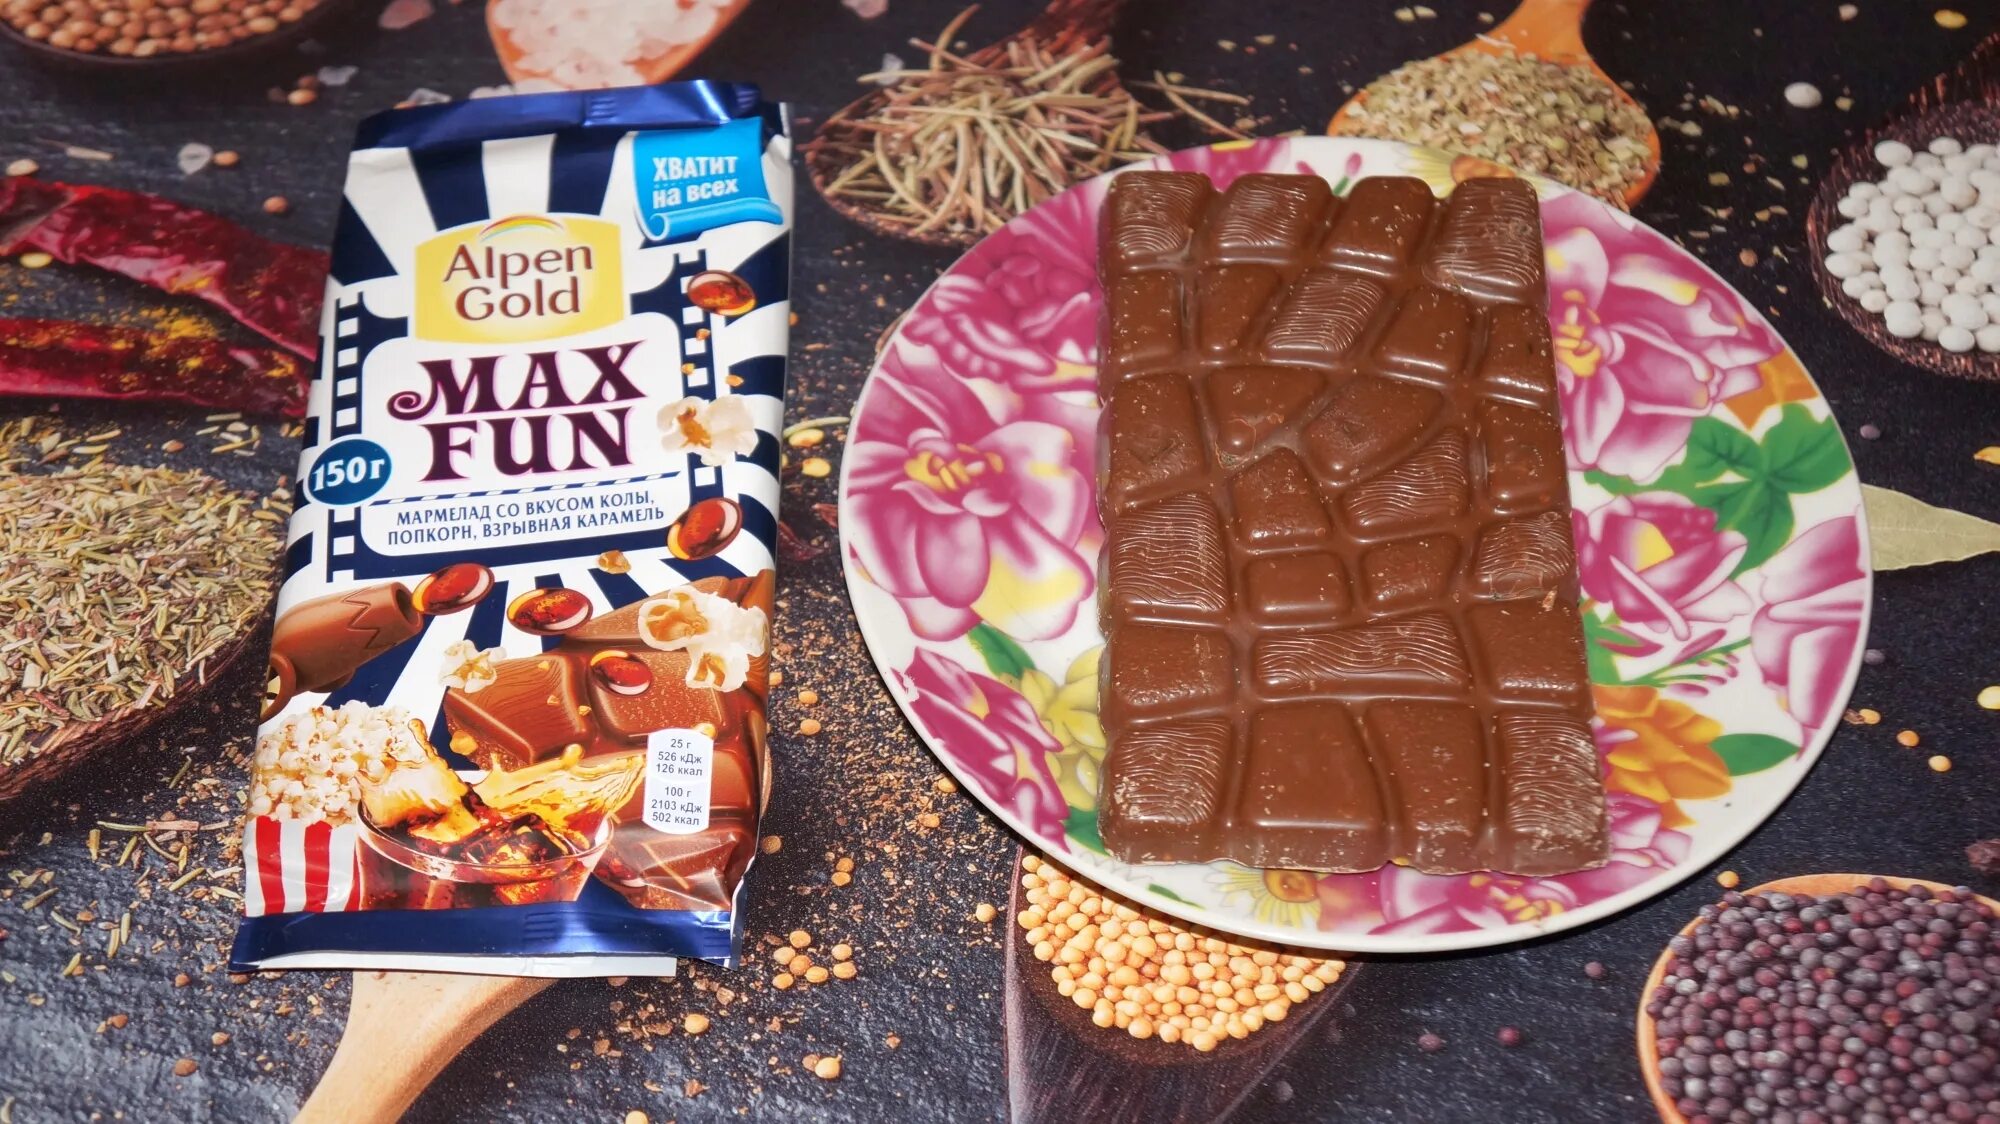 Fun mix. Шоколад Альпен Голд Max fun, взрывная карамель, 160 г. Шоколад Альпен Гольд Макс. Шоколадка Альпен Гольд Макс фан. Alpen Gold Max fun.